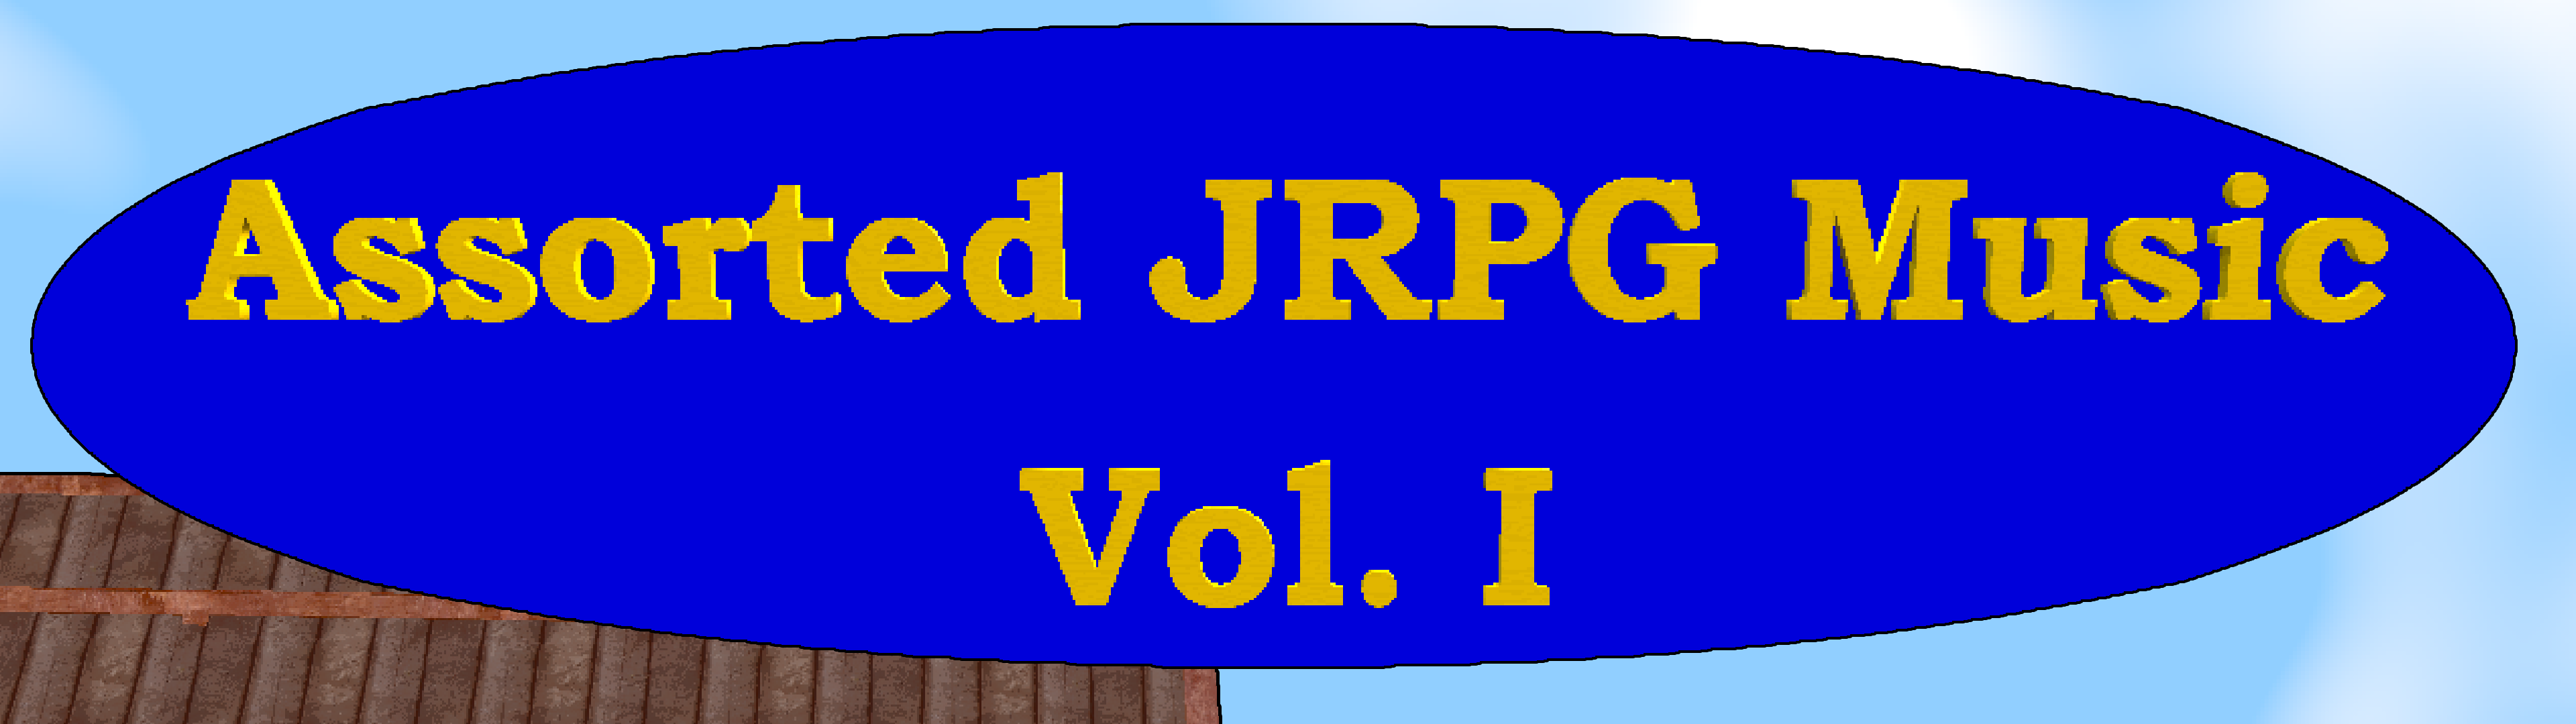 Assorted JRPG Music Vol. 1